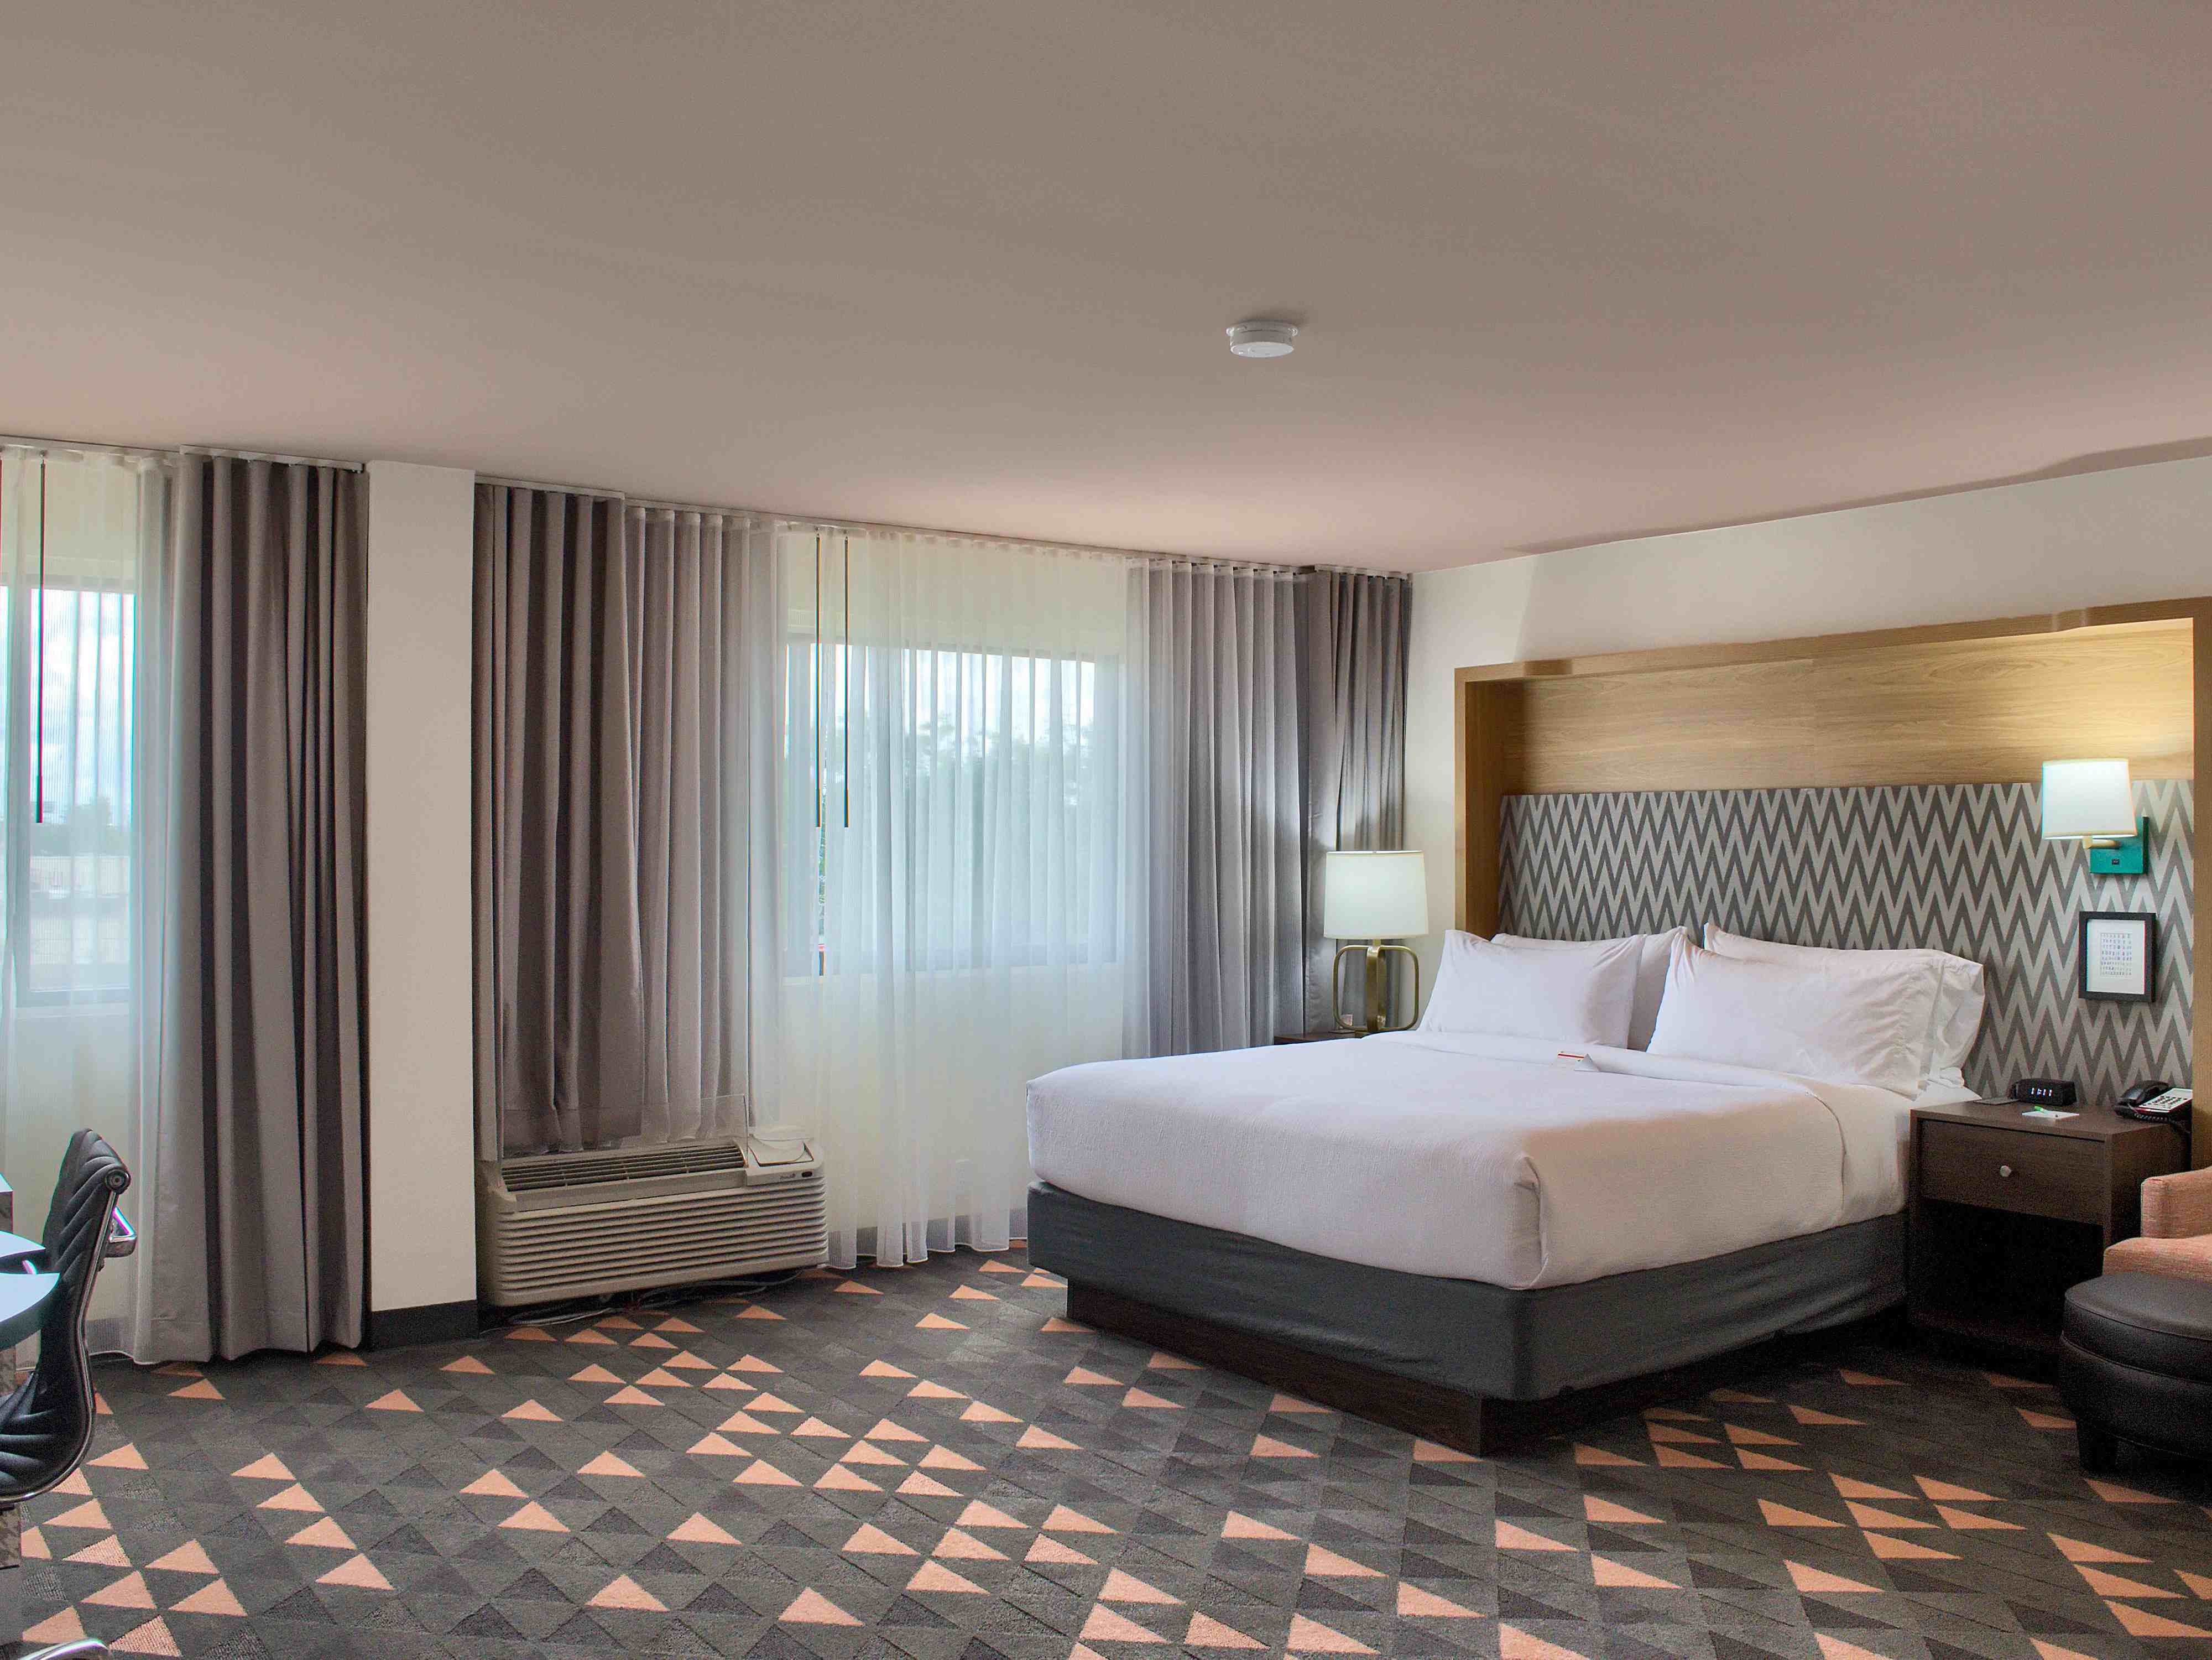 Holiday Inn Hotel Rooms